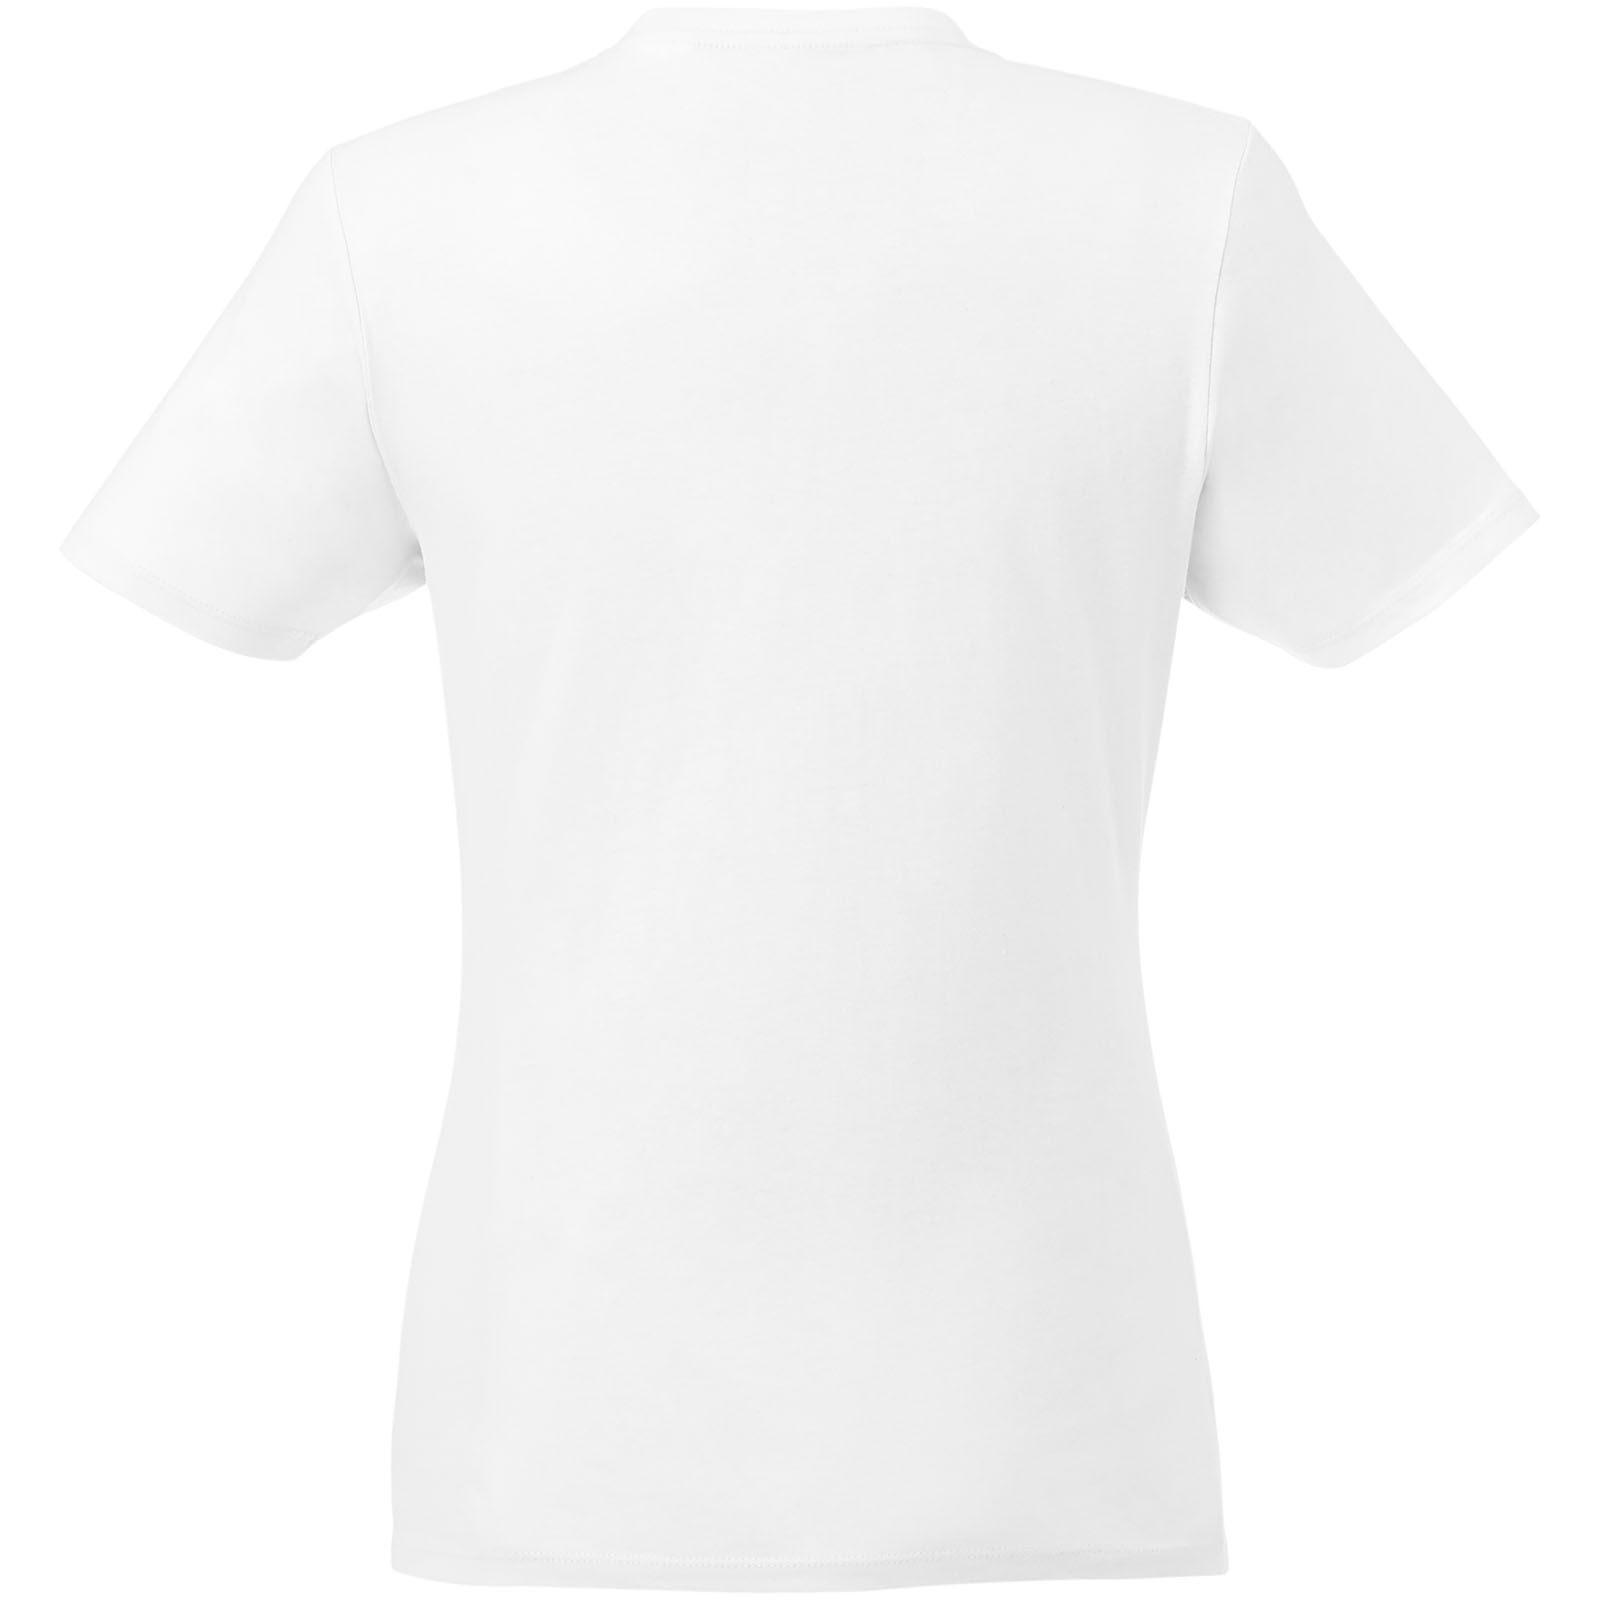 Advertising T-shirts - Heros short sleeve women's t-shirt - 2